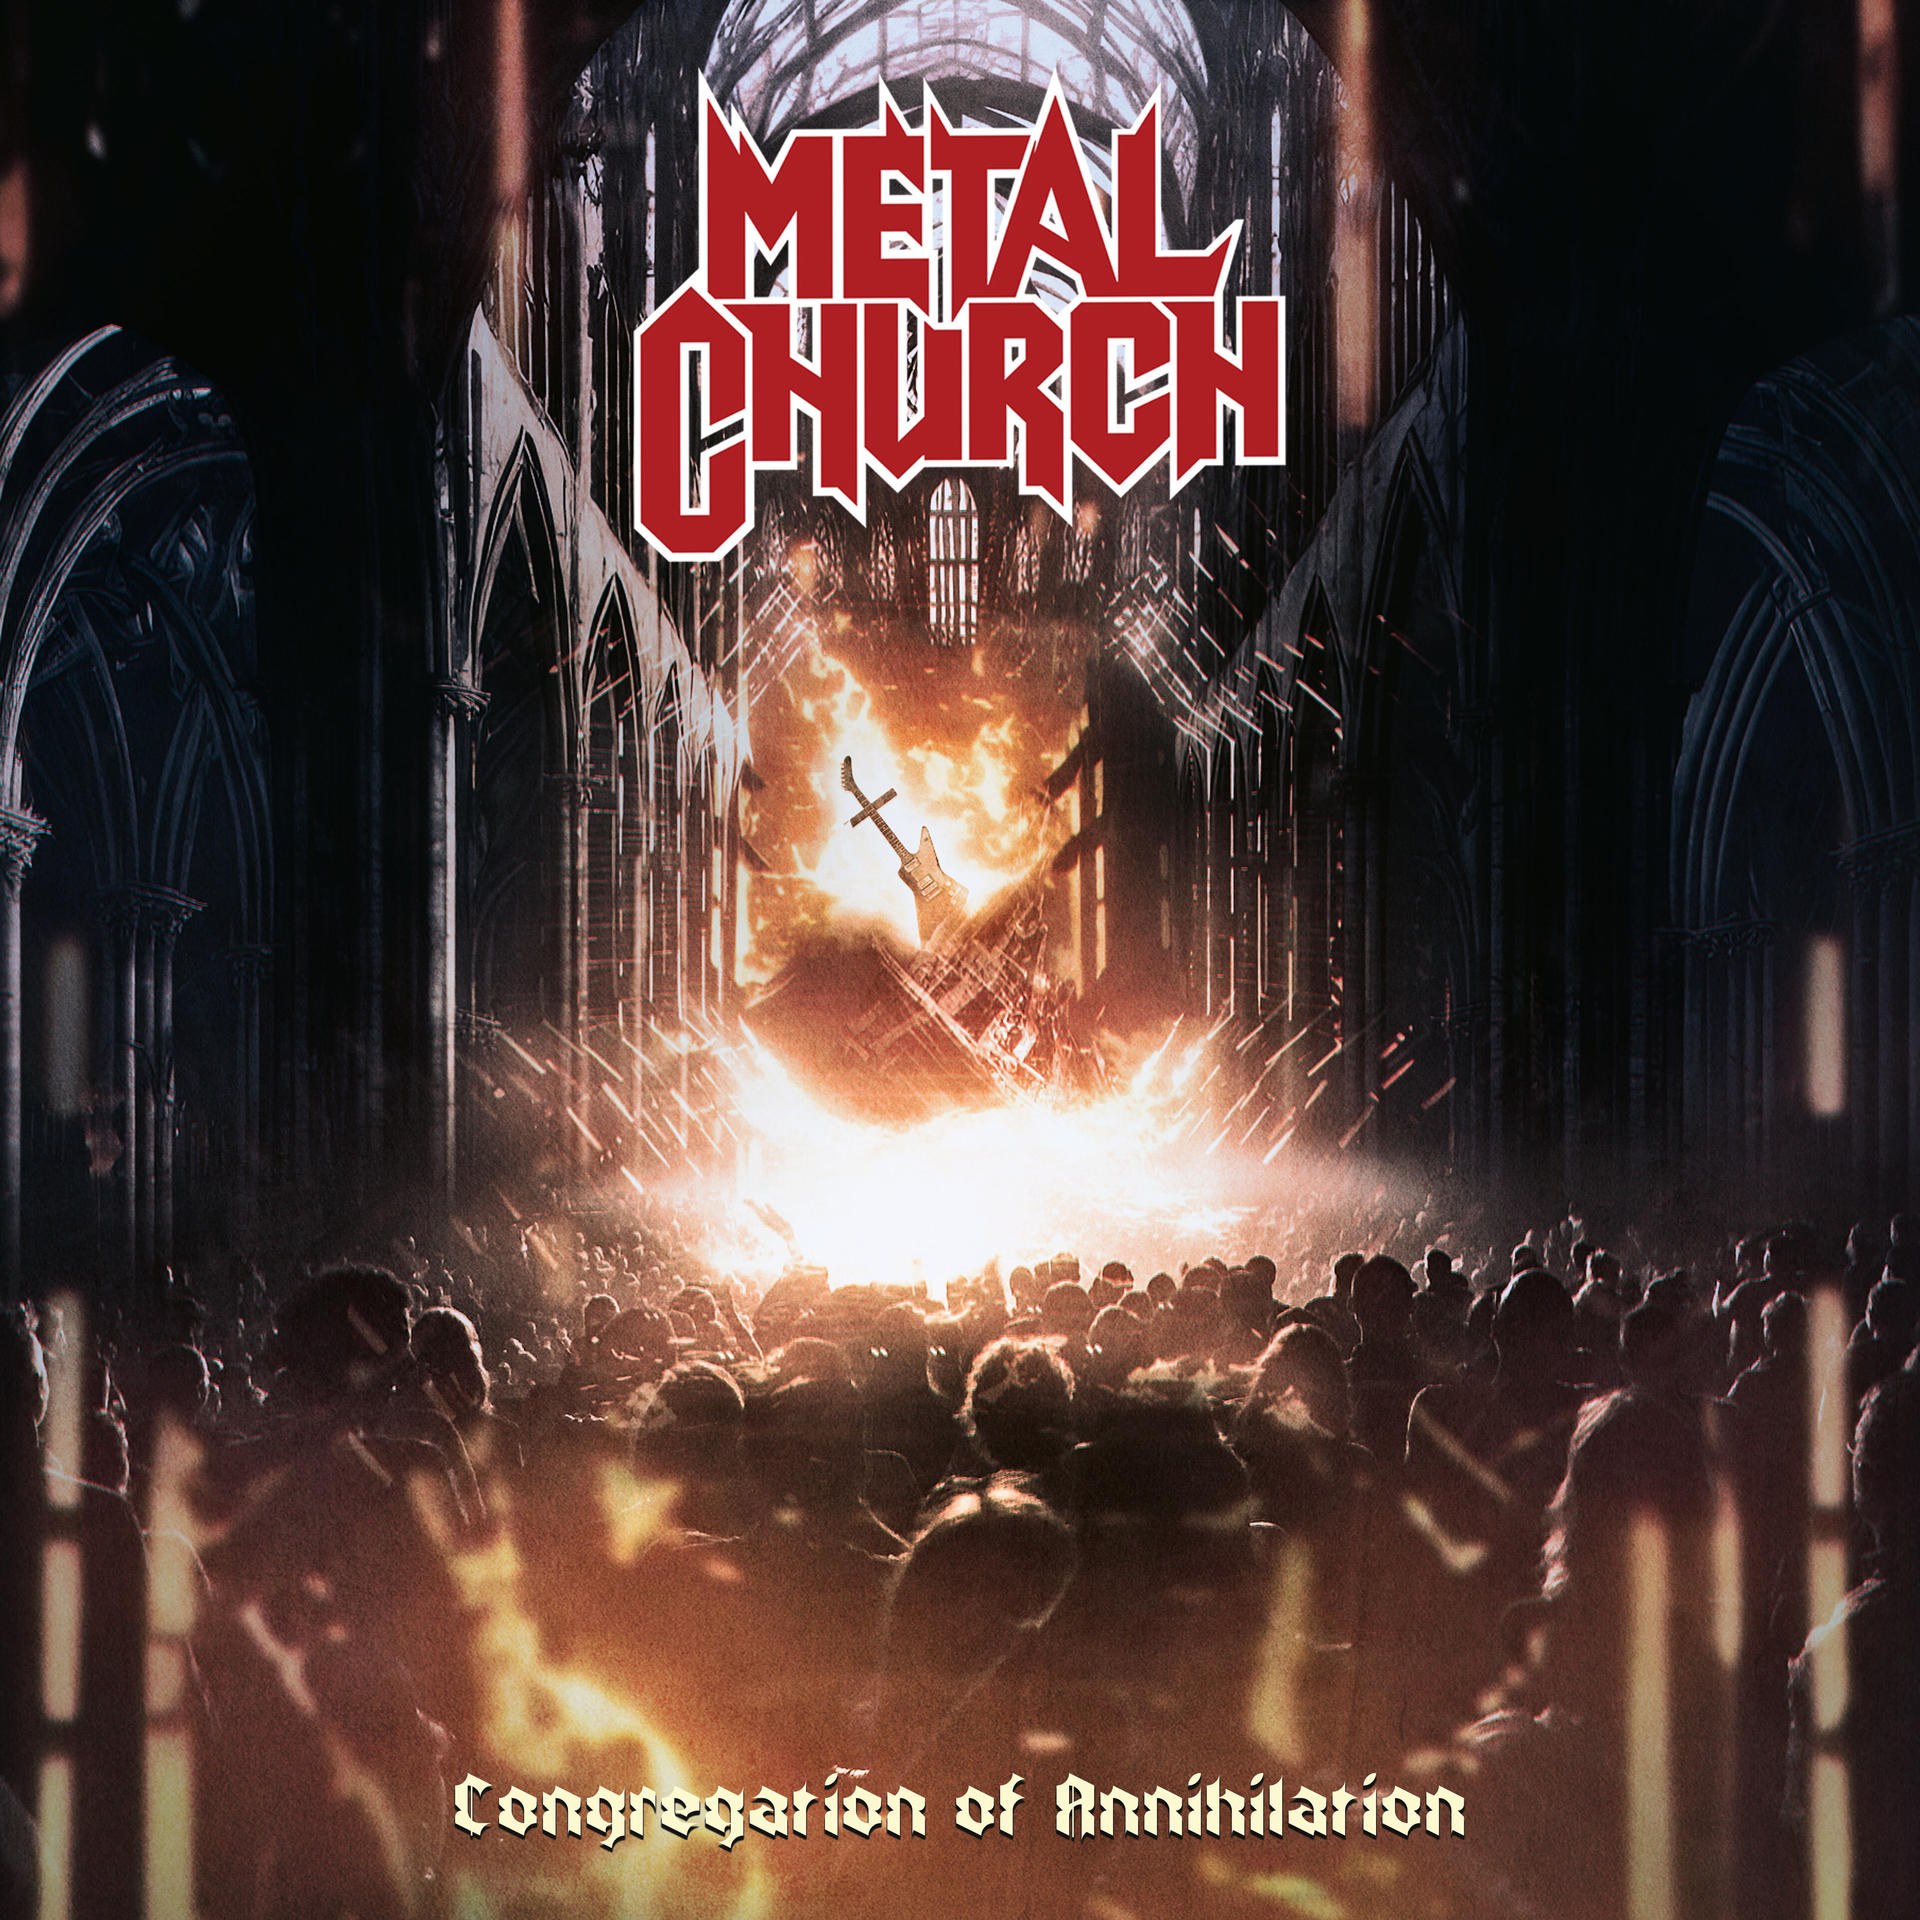 (Splatter of Annihilation - Congregation Church - (Vinyl) Metal Vinyl)